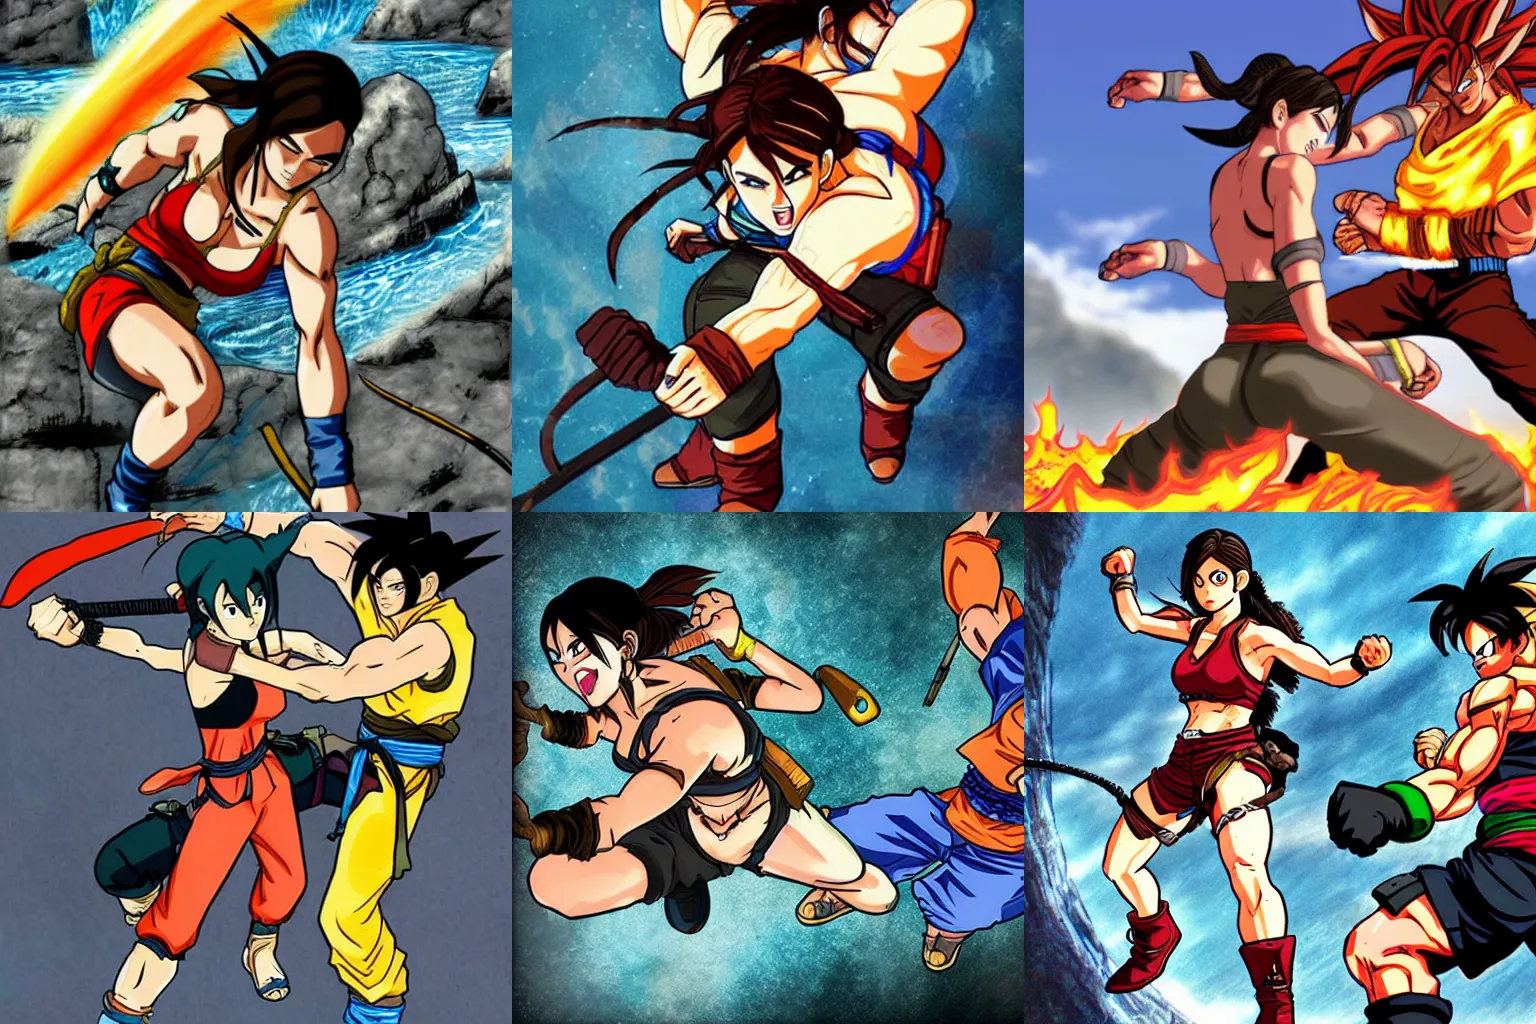 Prompt: Lara Croft fighting Goku, anime